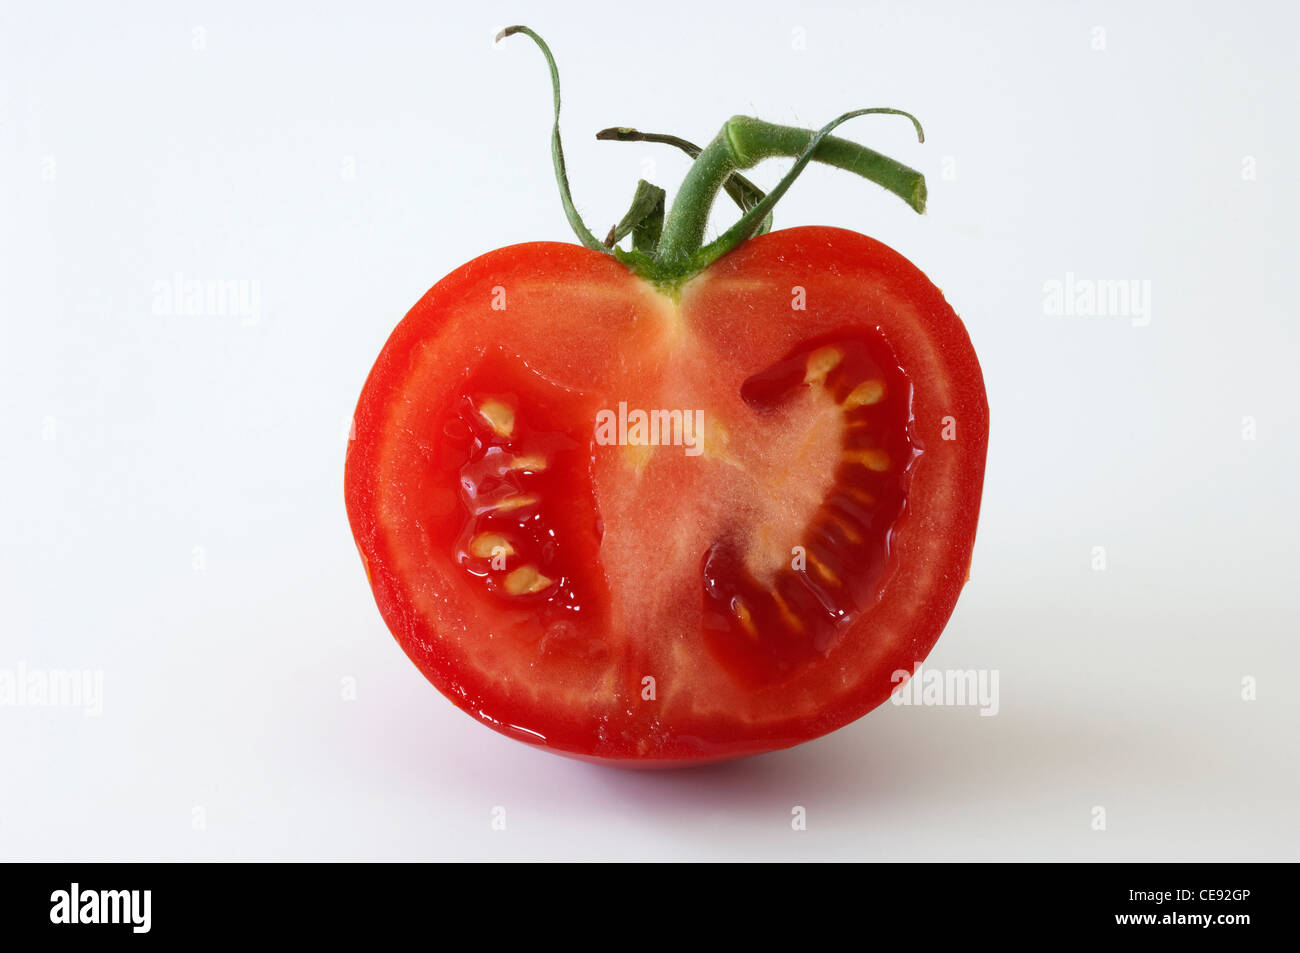 Tomato (Lycopersicon esculentum), halved fruit. Studio picture against a white background. Stock Photo